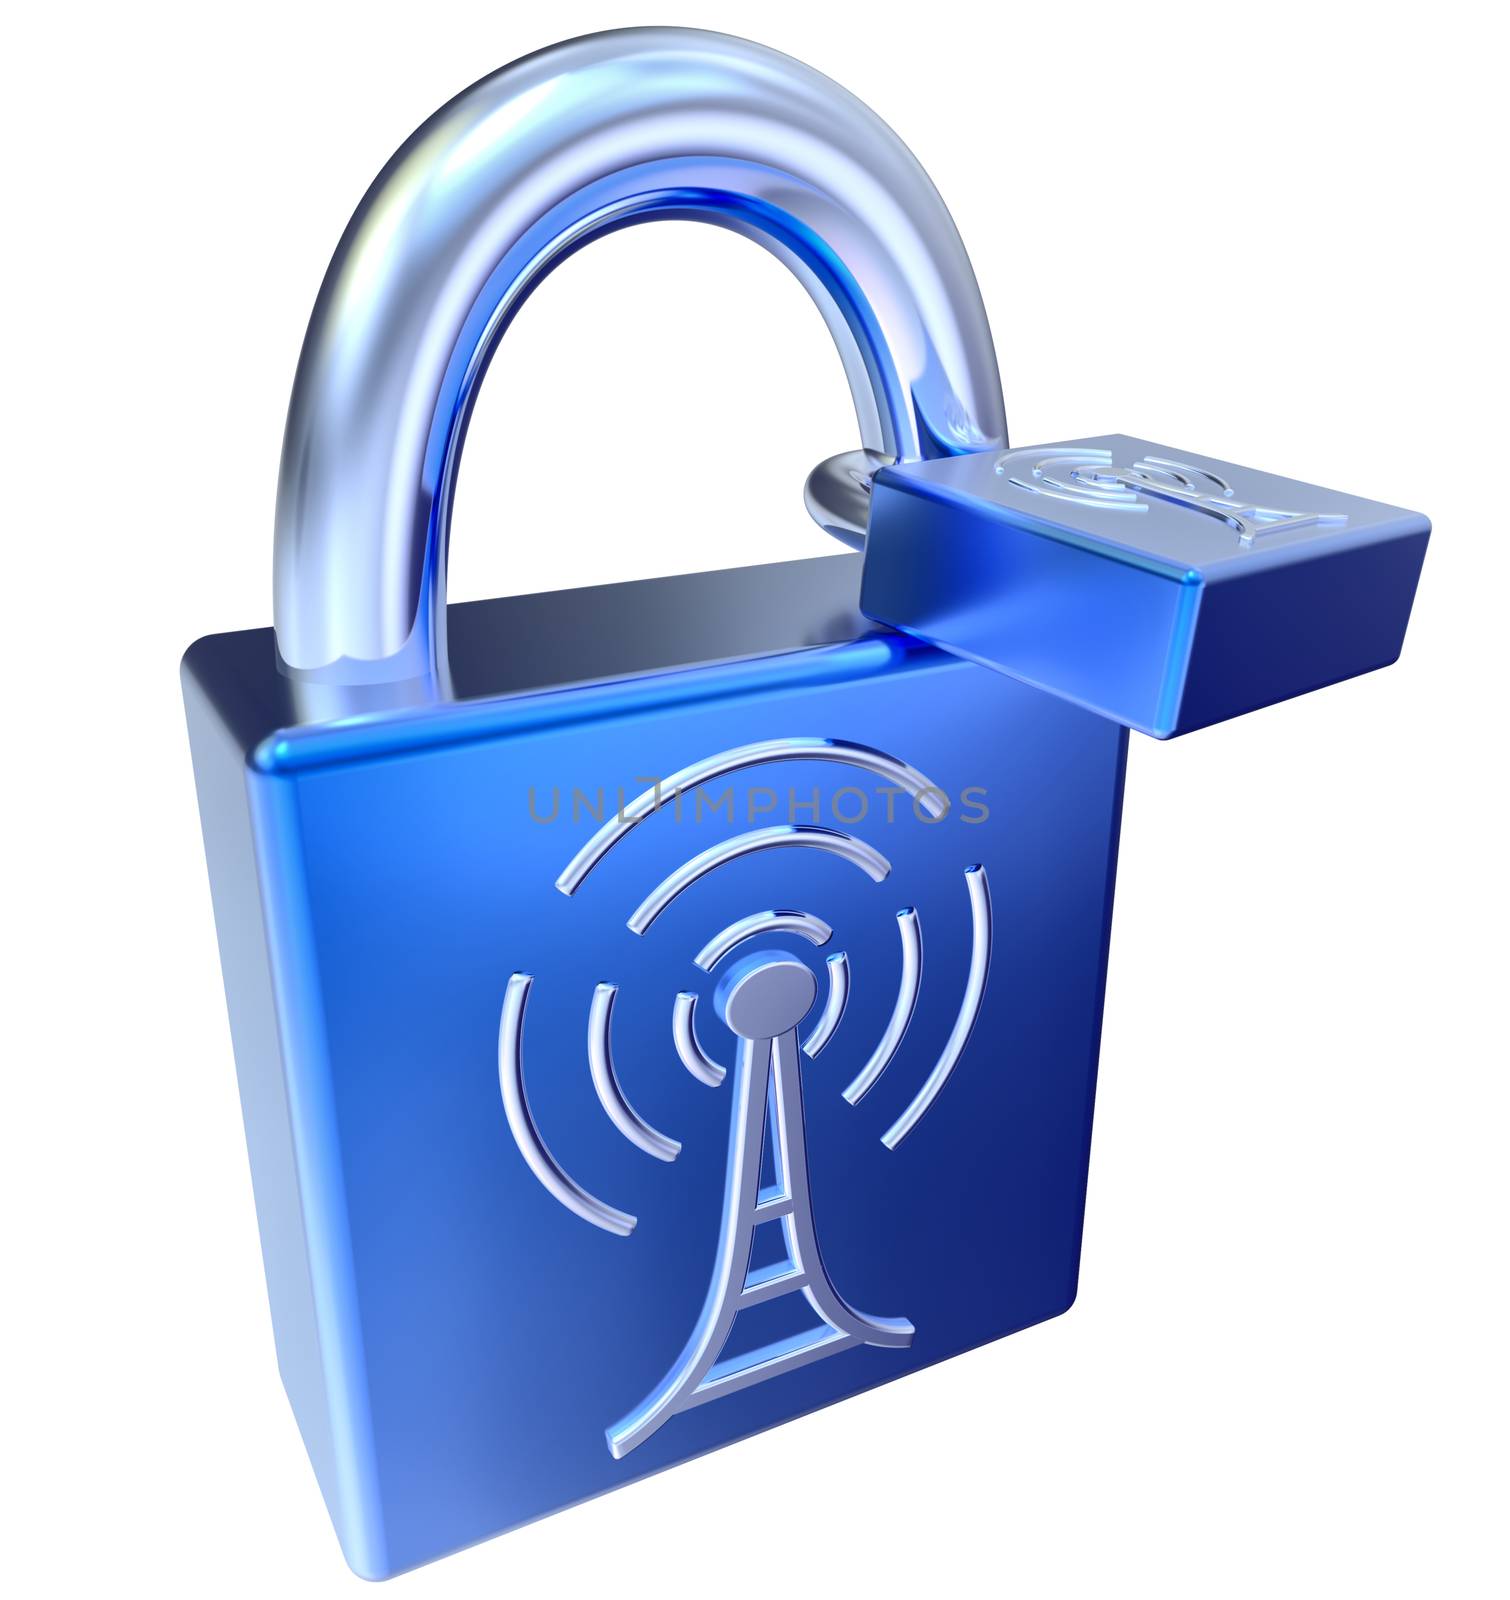 lock icon for digital transmitter as symbol locked information signals